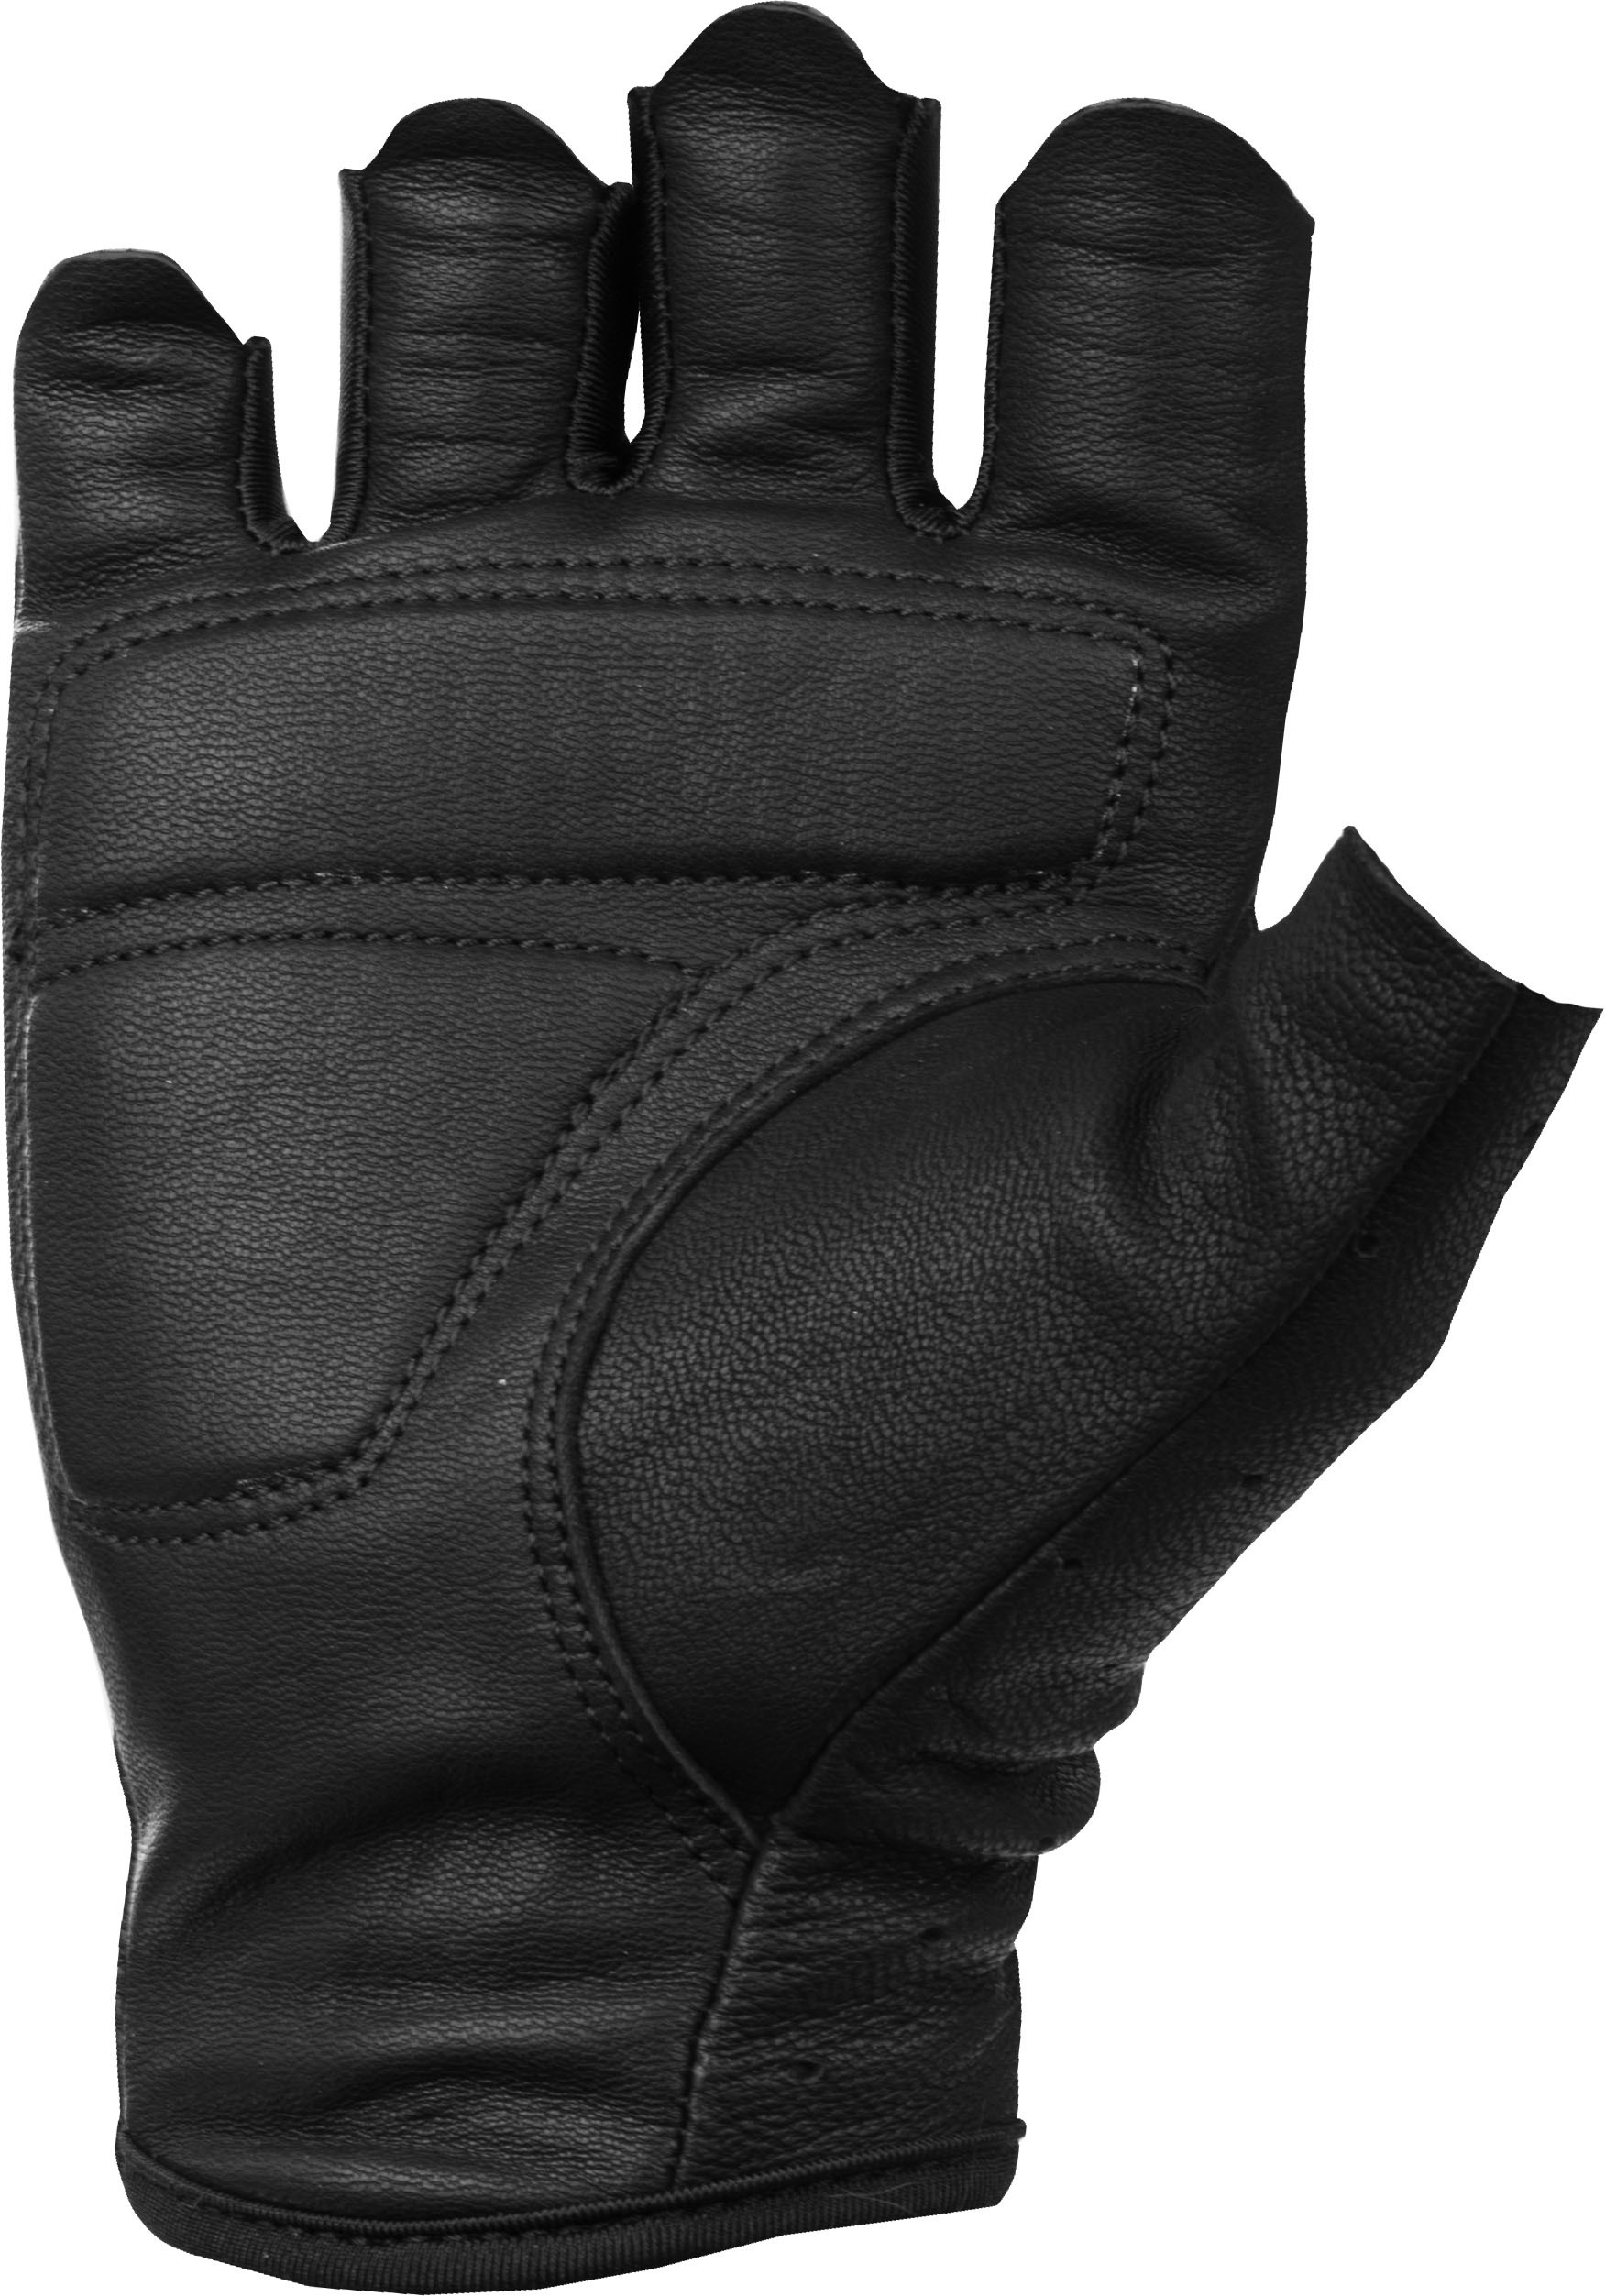 Women's Ranger Riding Gloves Black X-Large - Click Image to Close